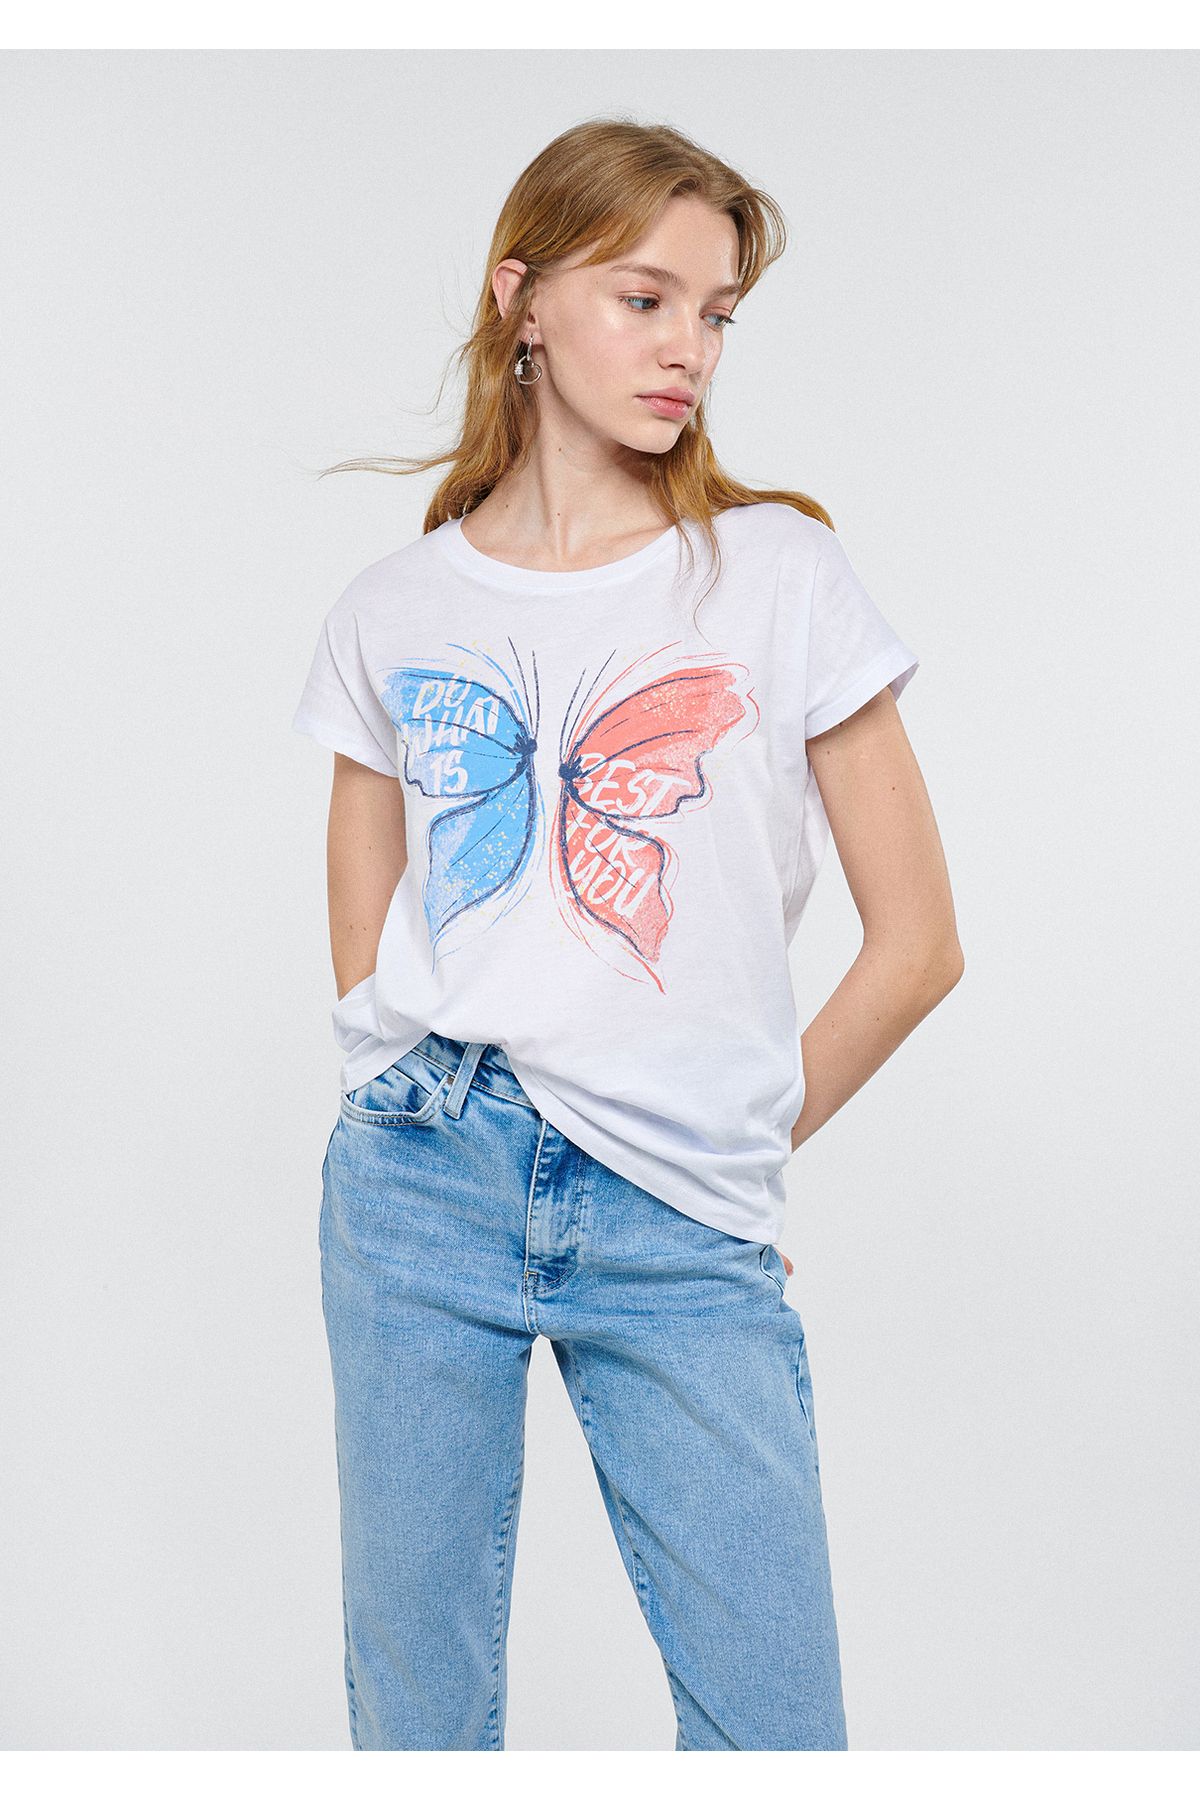 Mavi بهترین برای شما تی شرت سفید چاپ شده به طور منظم / برش معمولی 1611281-620